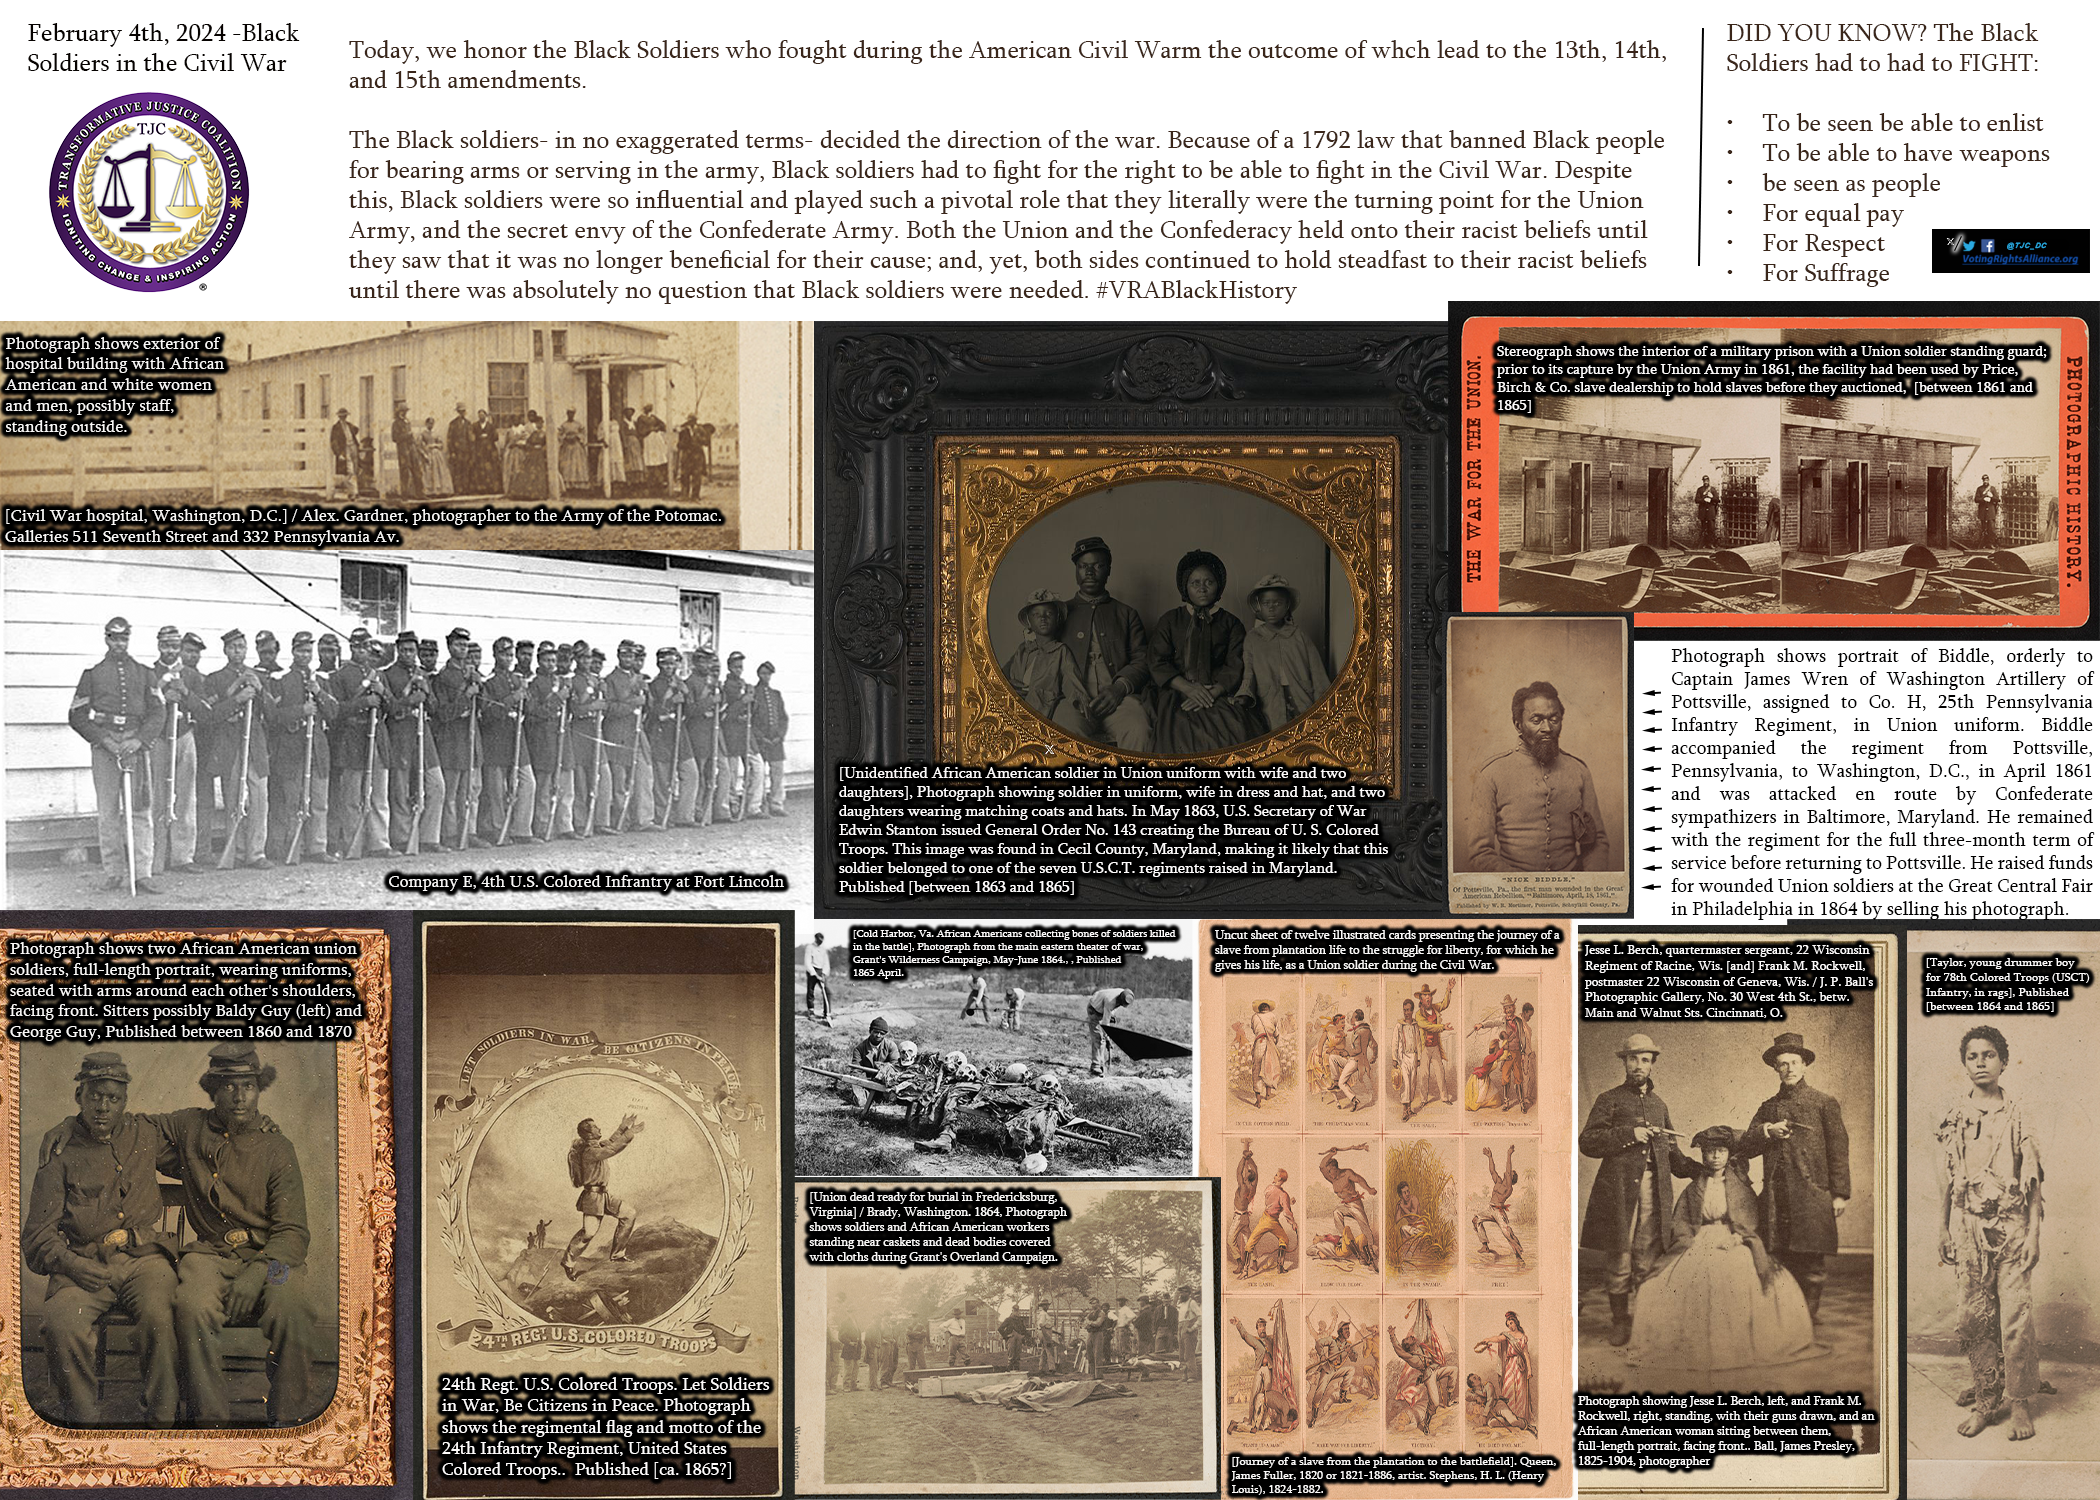 Feb. 4th, 2024- Black Soldiers in the Civil War (1861-1865) #VRABlackHistory